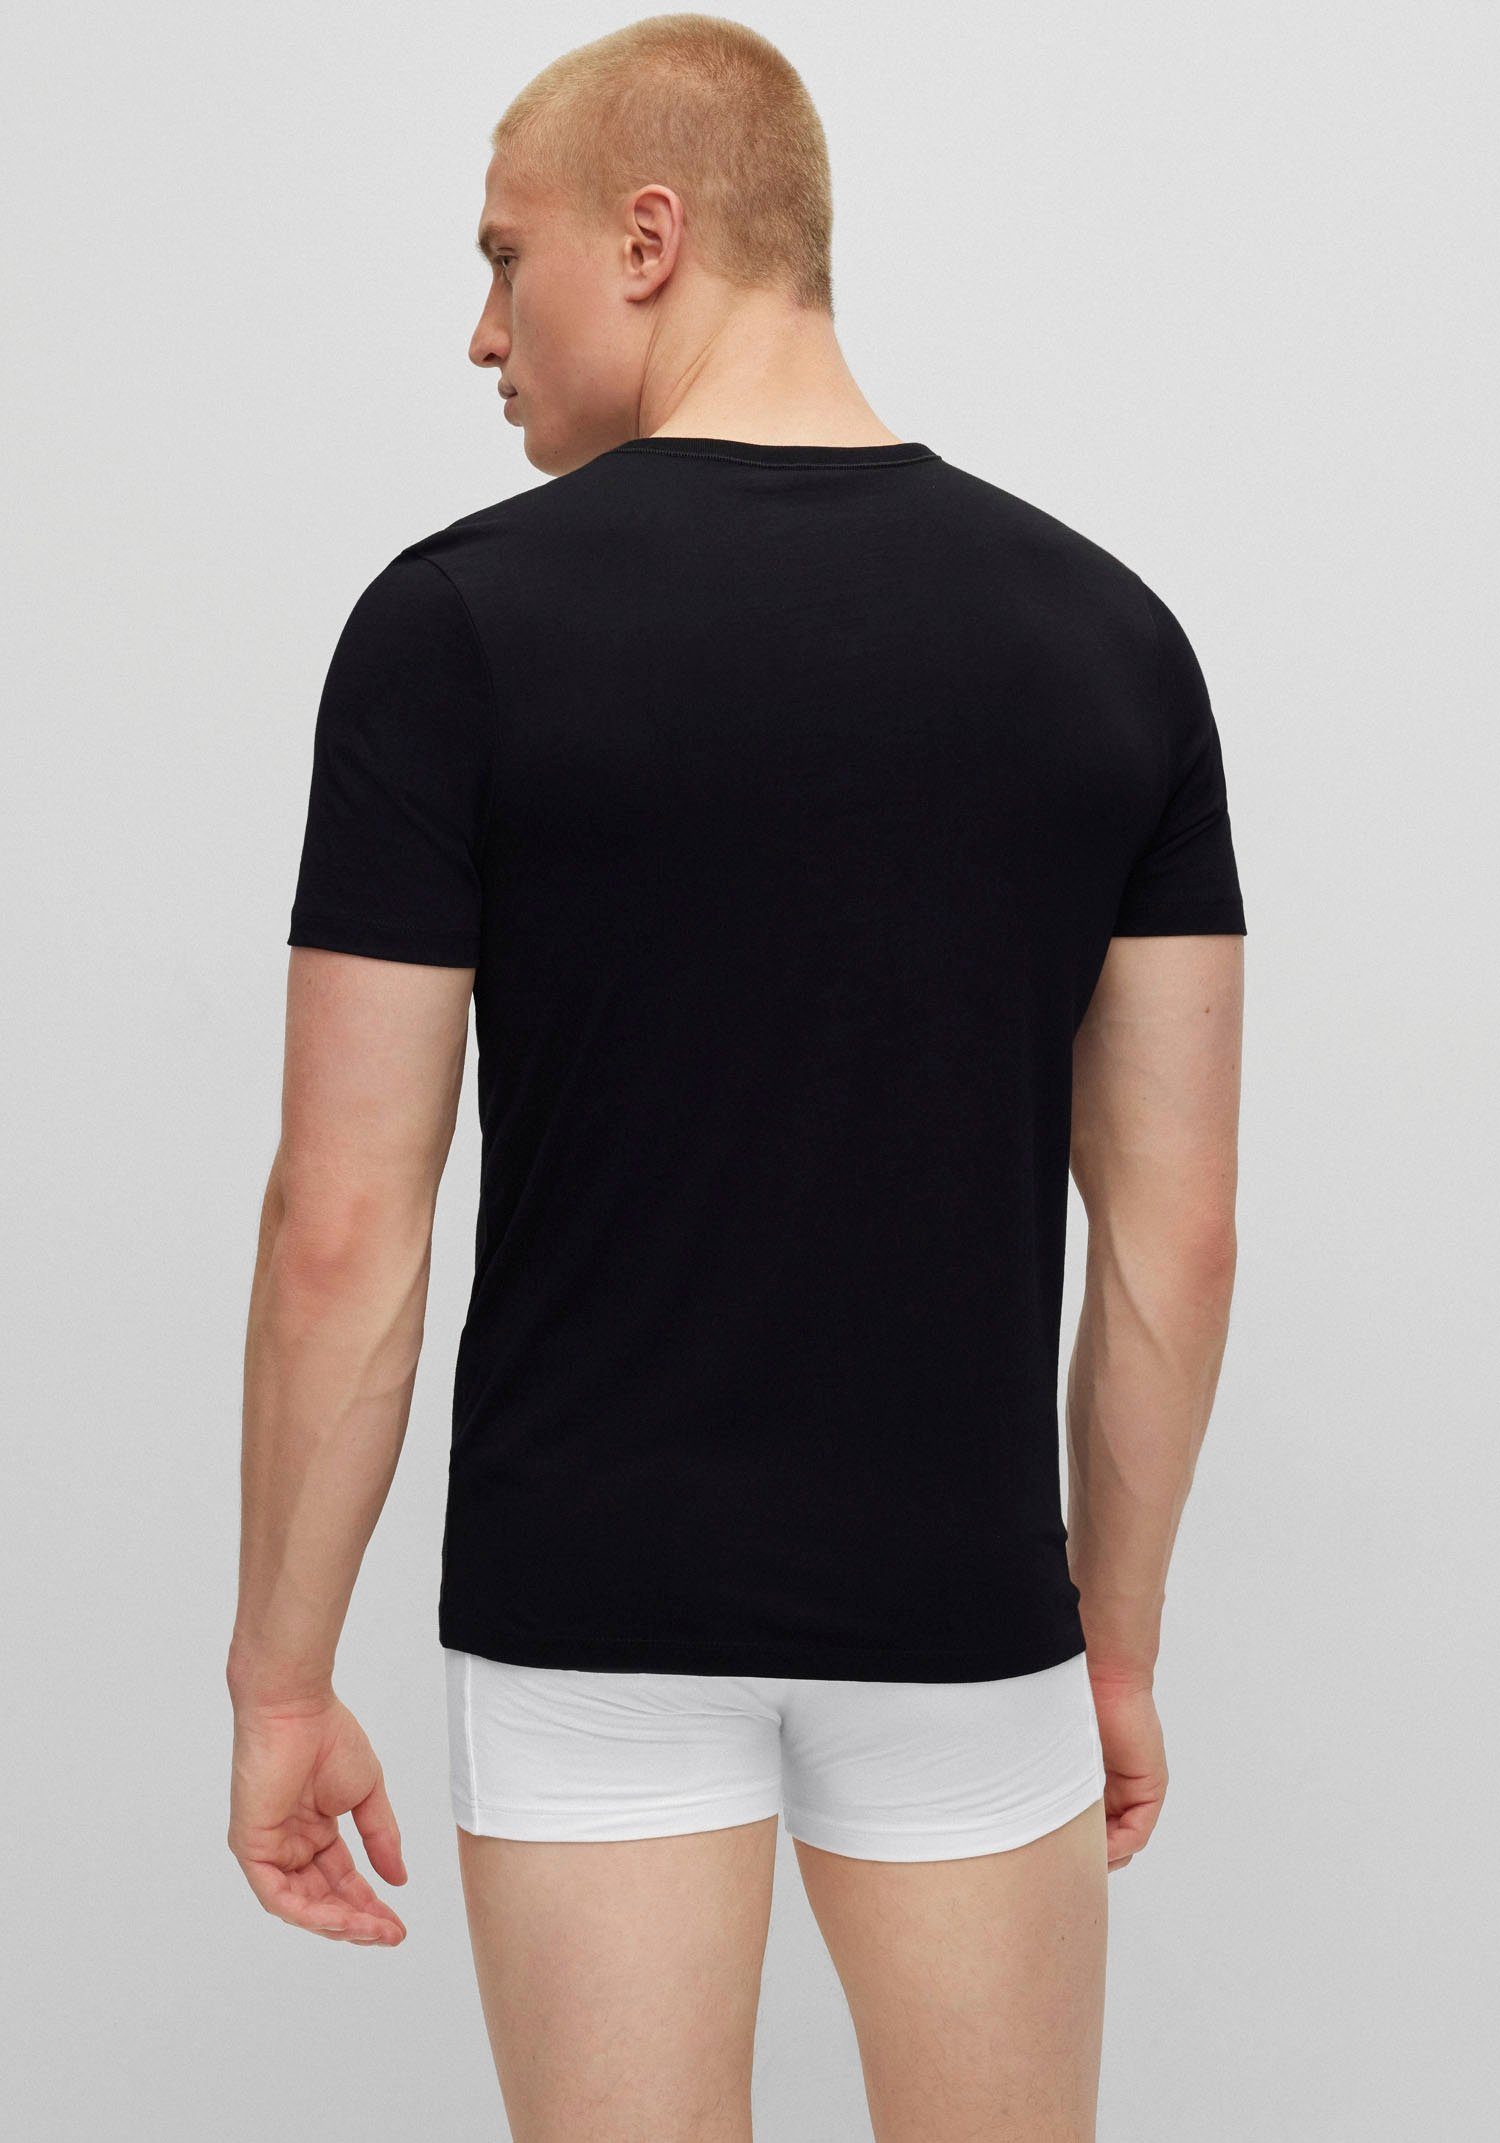 BOSS CO black T-Shirt (Packung) V-Shirt 3P VN